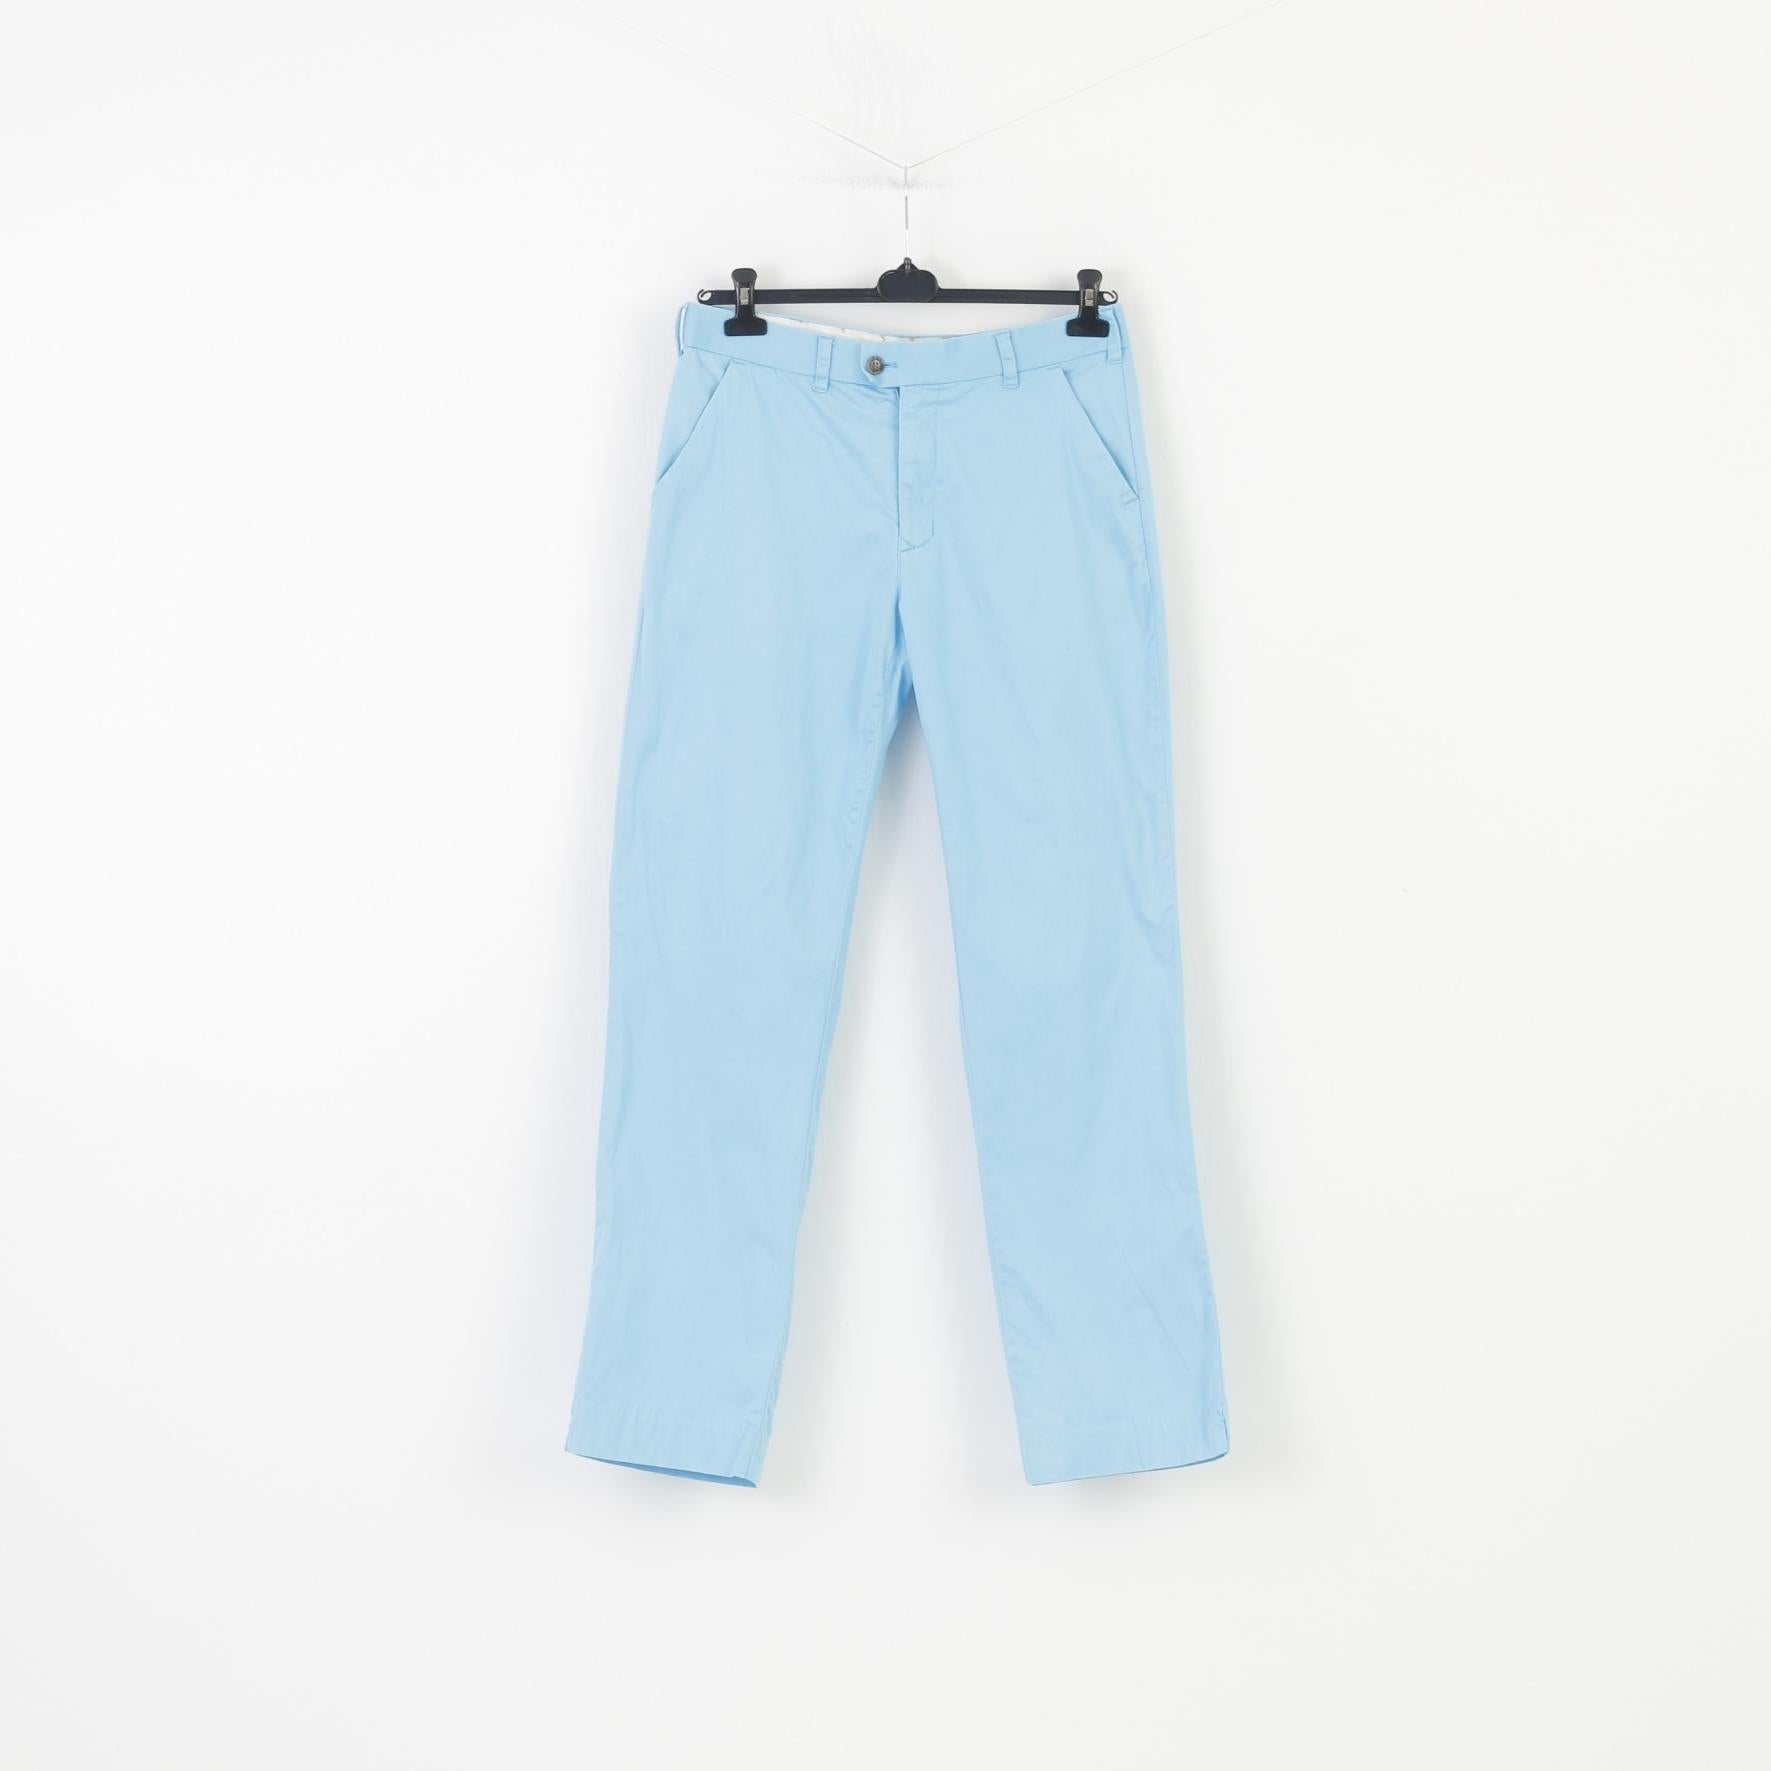 Loud Mouth Men 34 34 Trousers Blue Elegant Cotton Pockets Belt Loops Wide Leg Top